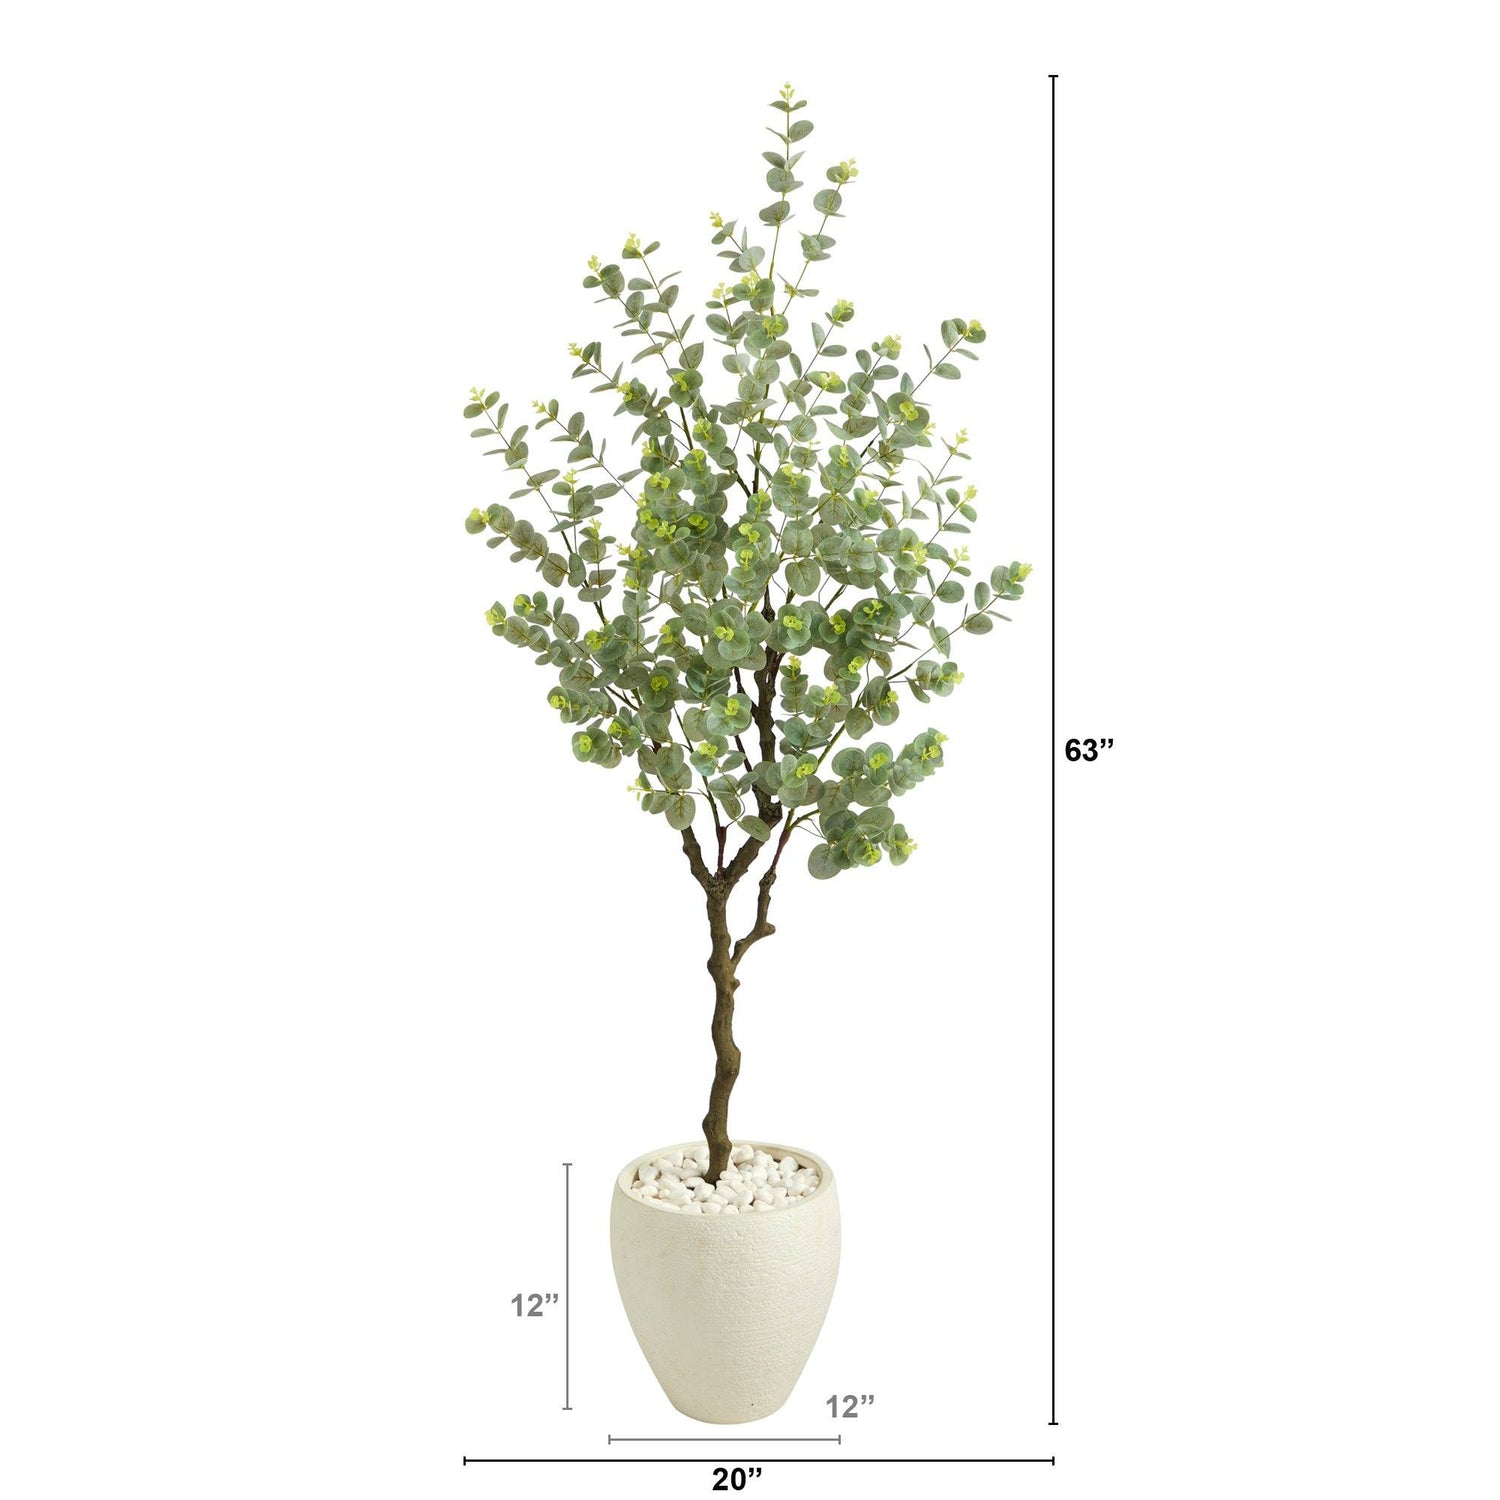 6' Ficus Artificial Tree in White Tin Planter